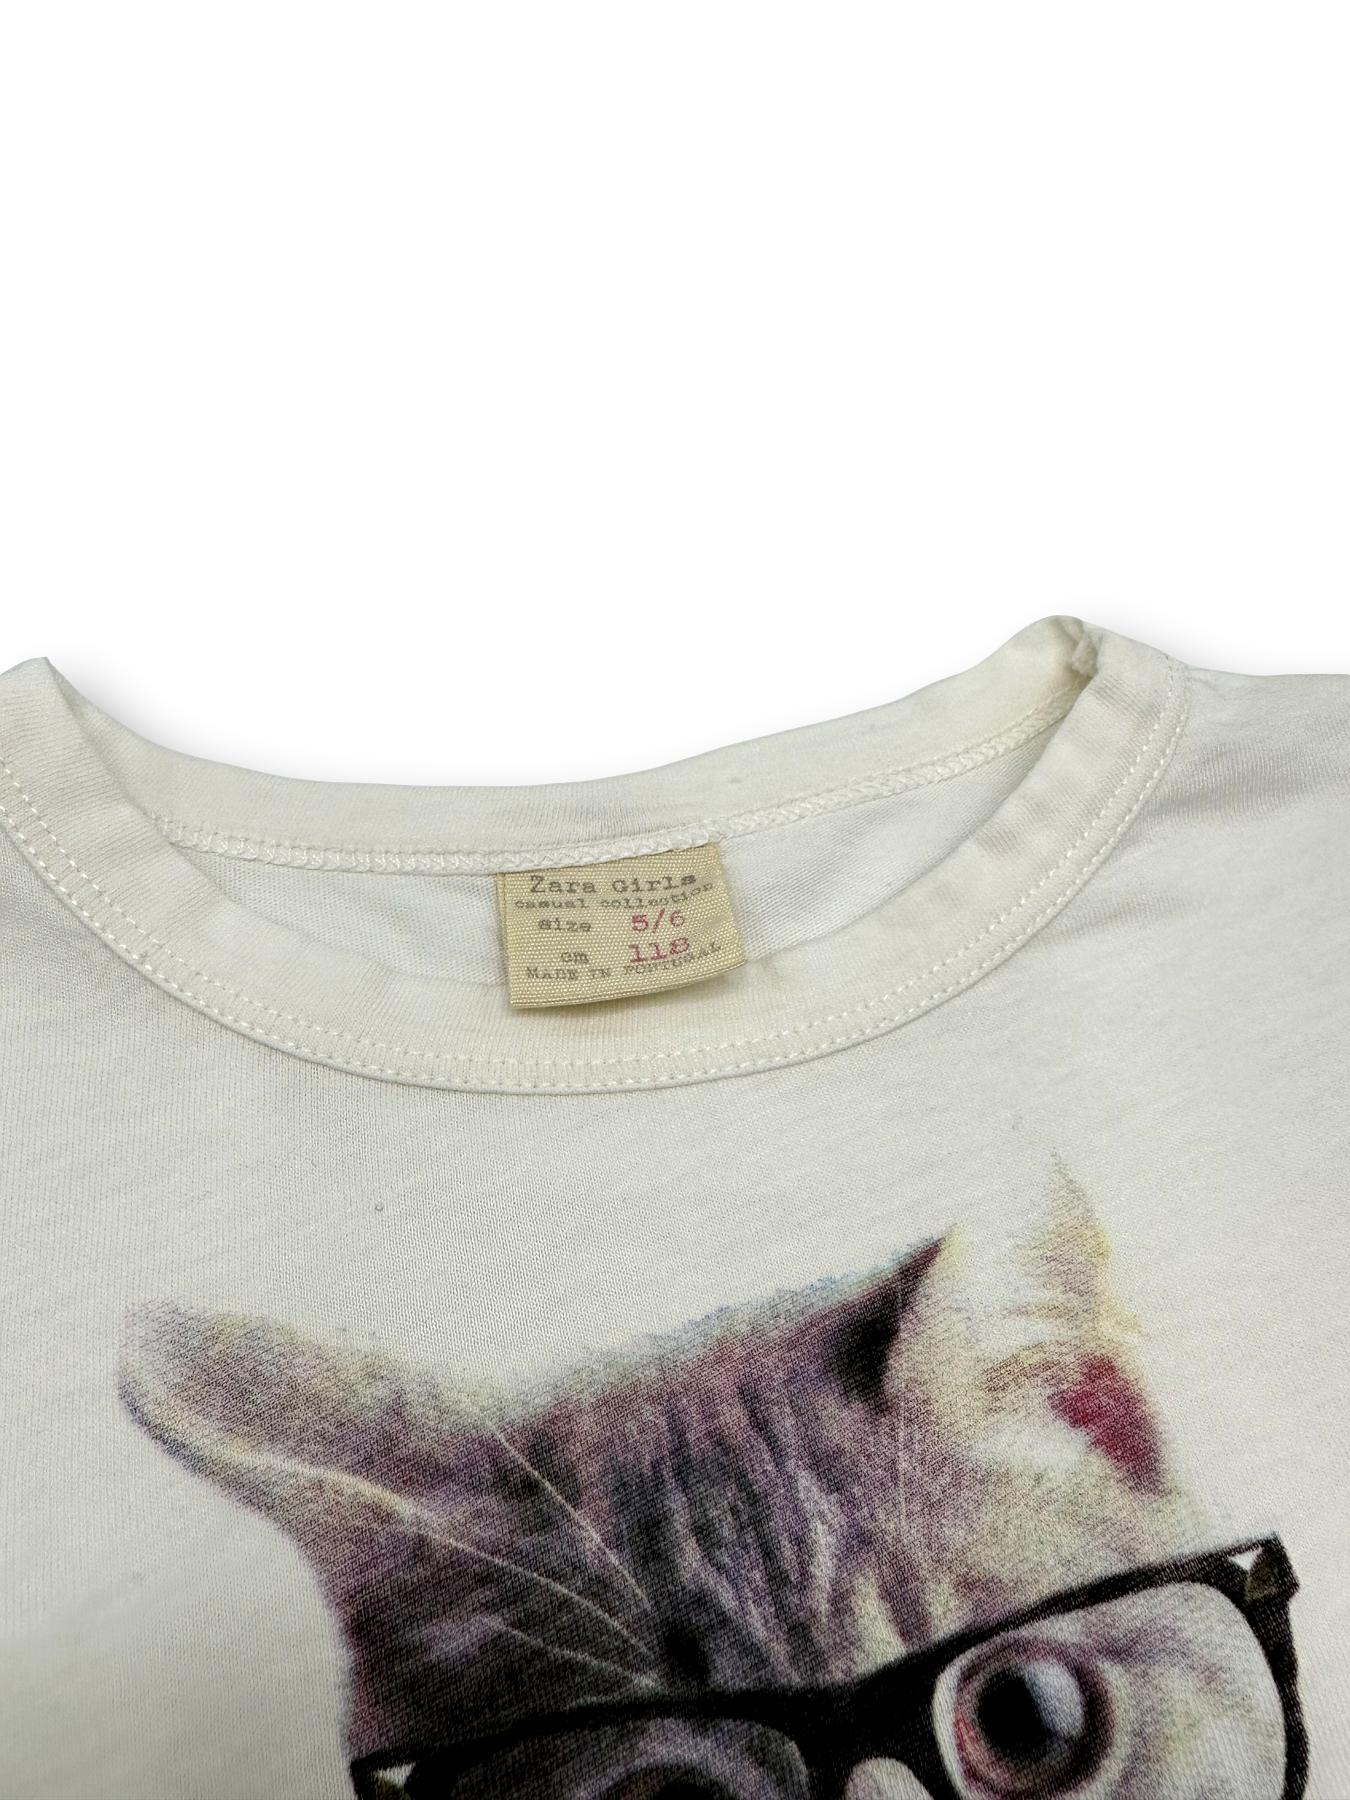 T-shirt Gato 5-6 Anos – ZARA